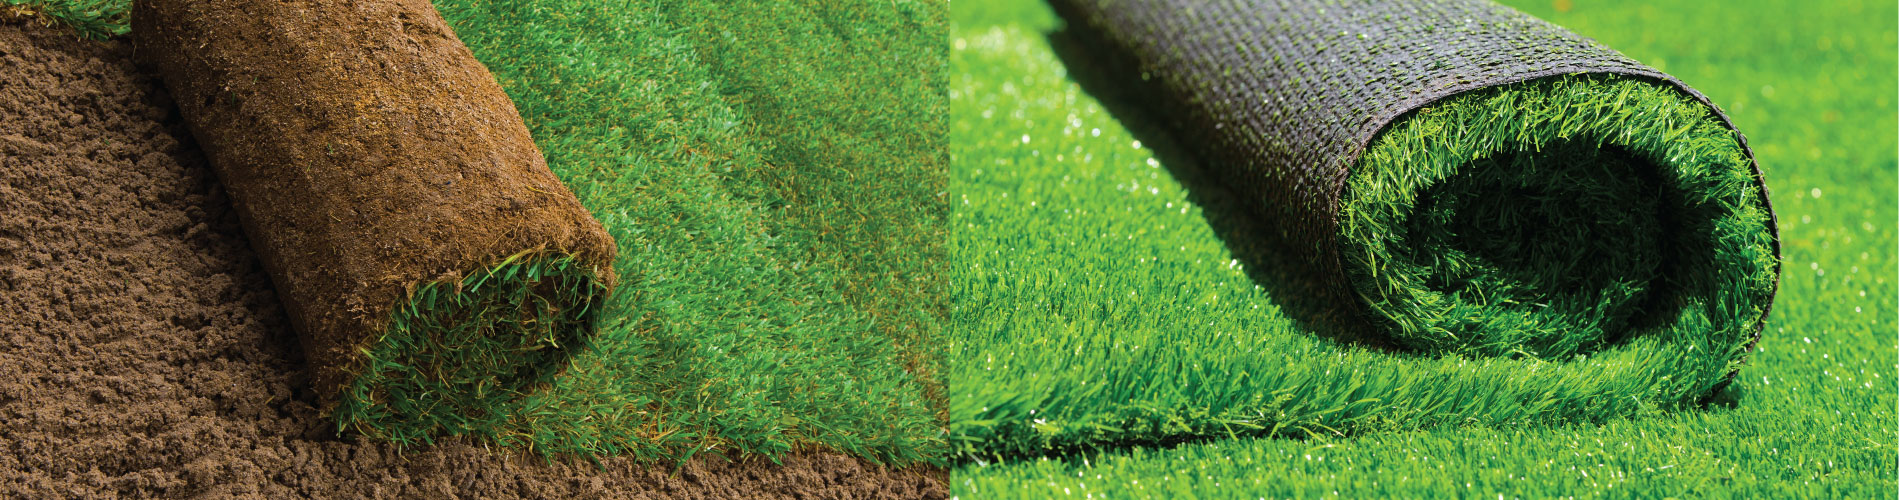 natural turfgrass vs artificial turf